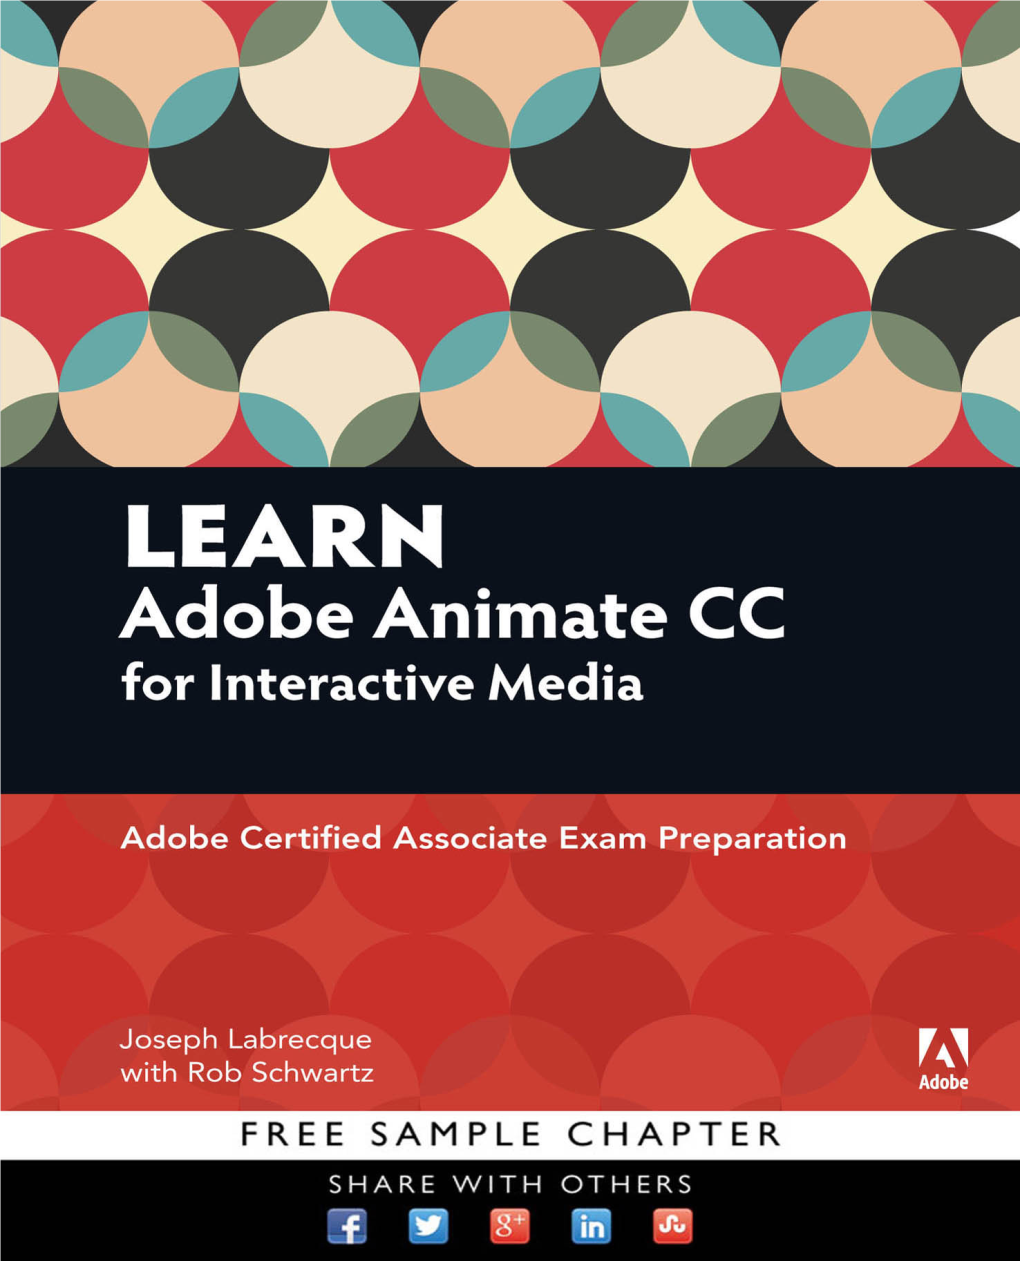 LEARN Adobe Animate CC for Interactive Media